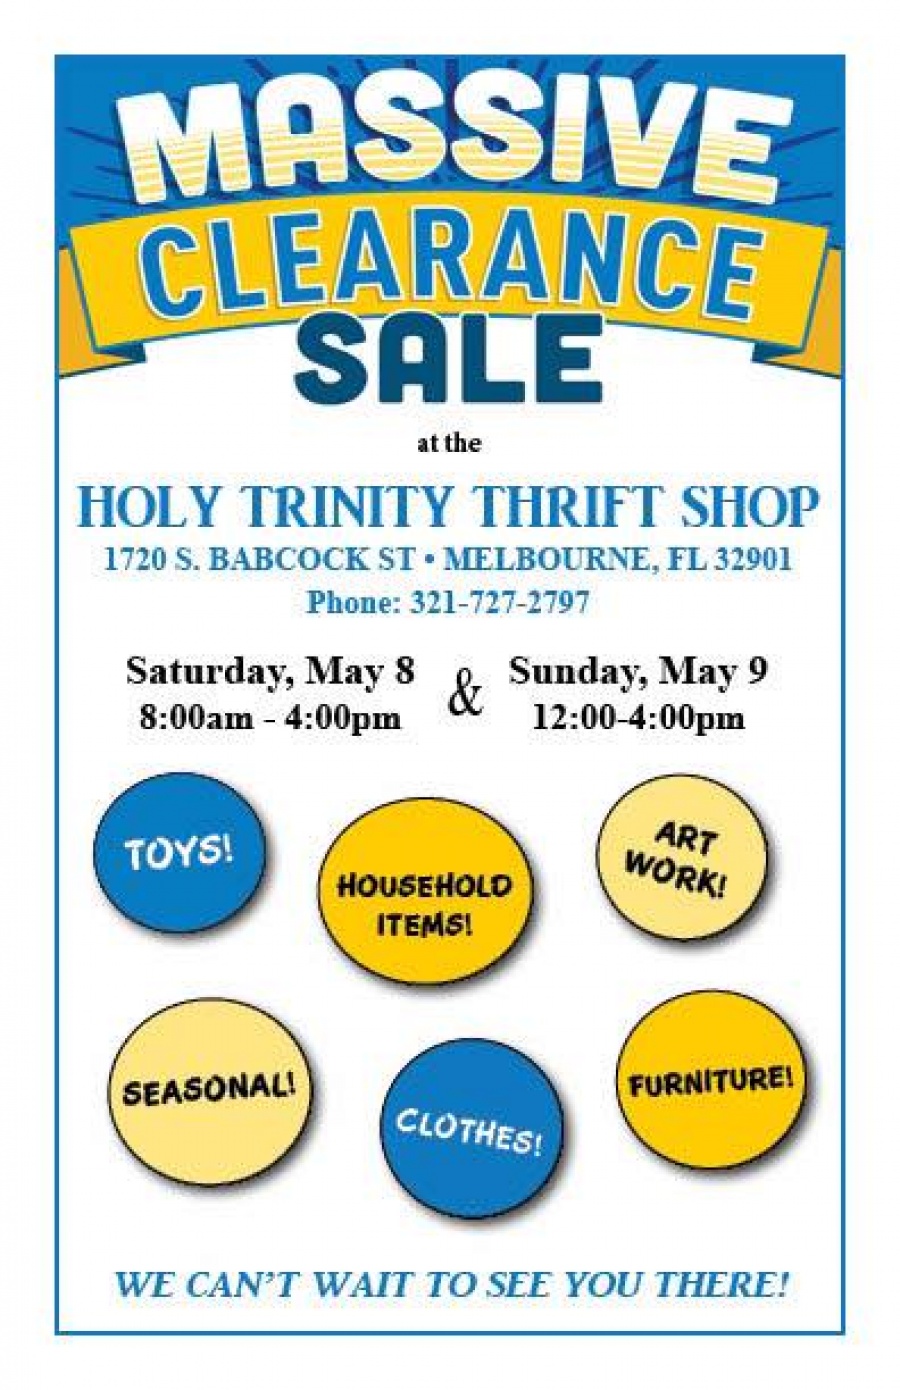 Holy Trinity Episcopal Church Thrift Shop Clearance Sale